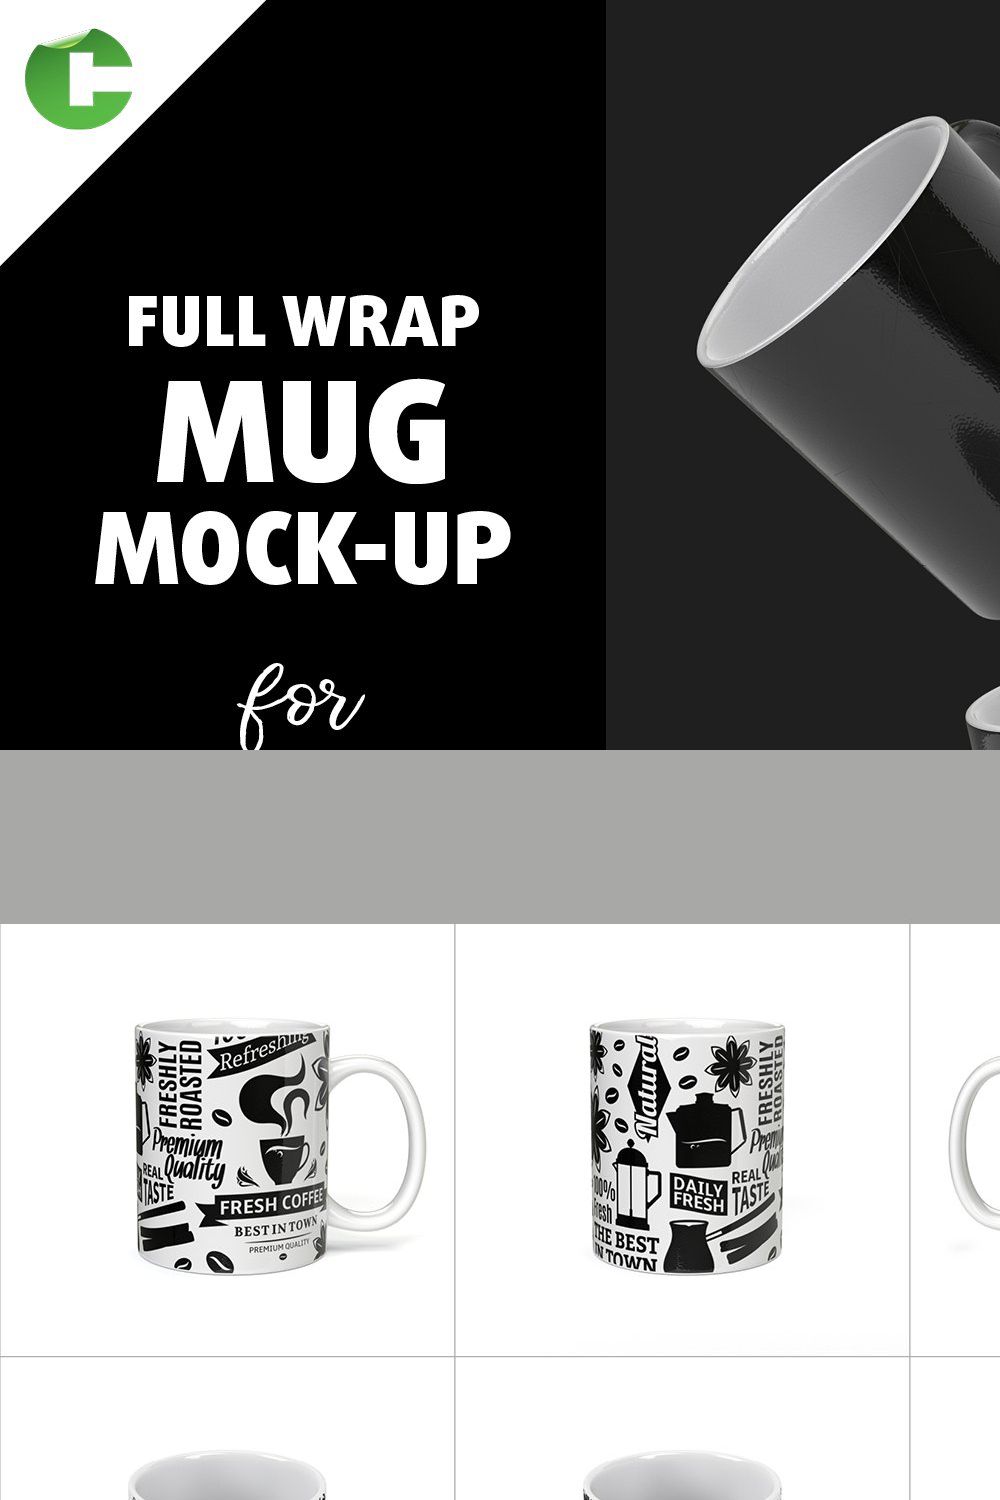 Full Wrap Mug Mock-up pinterest preview image.